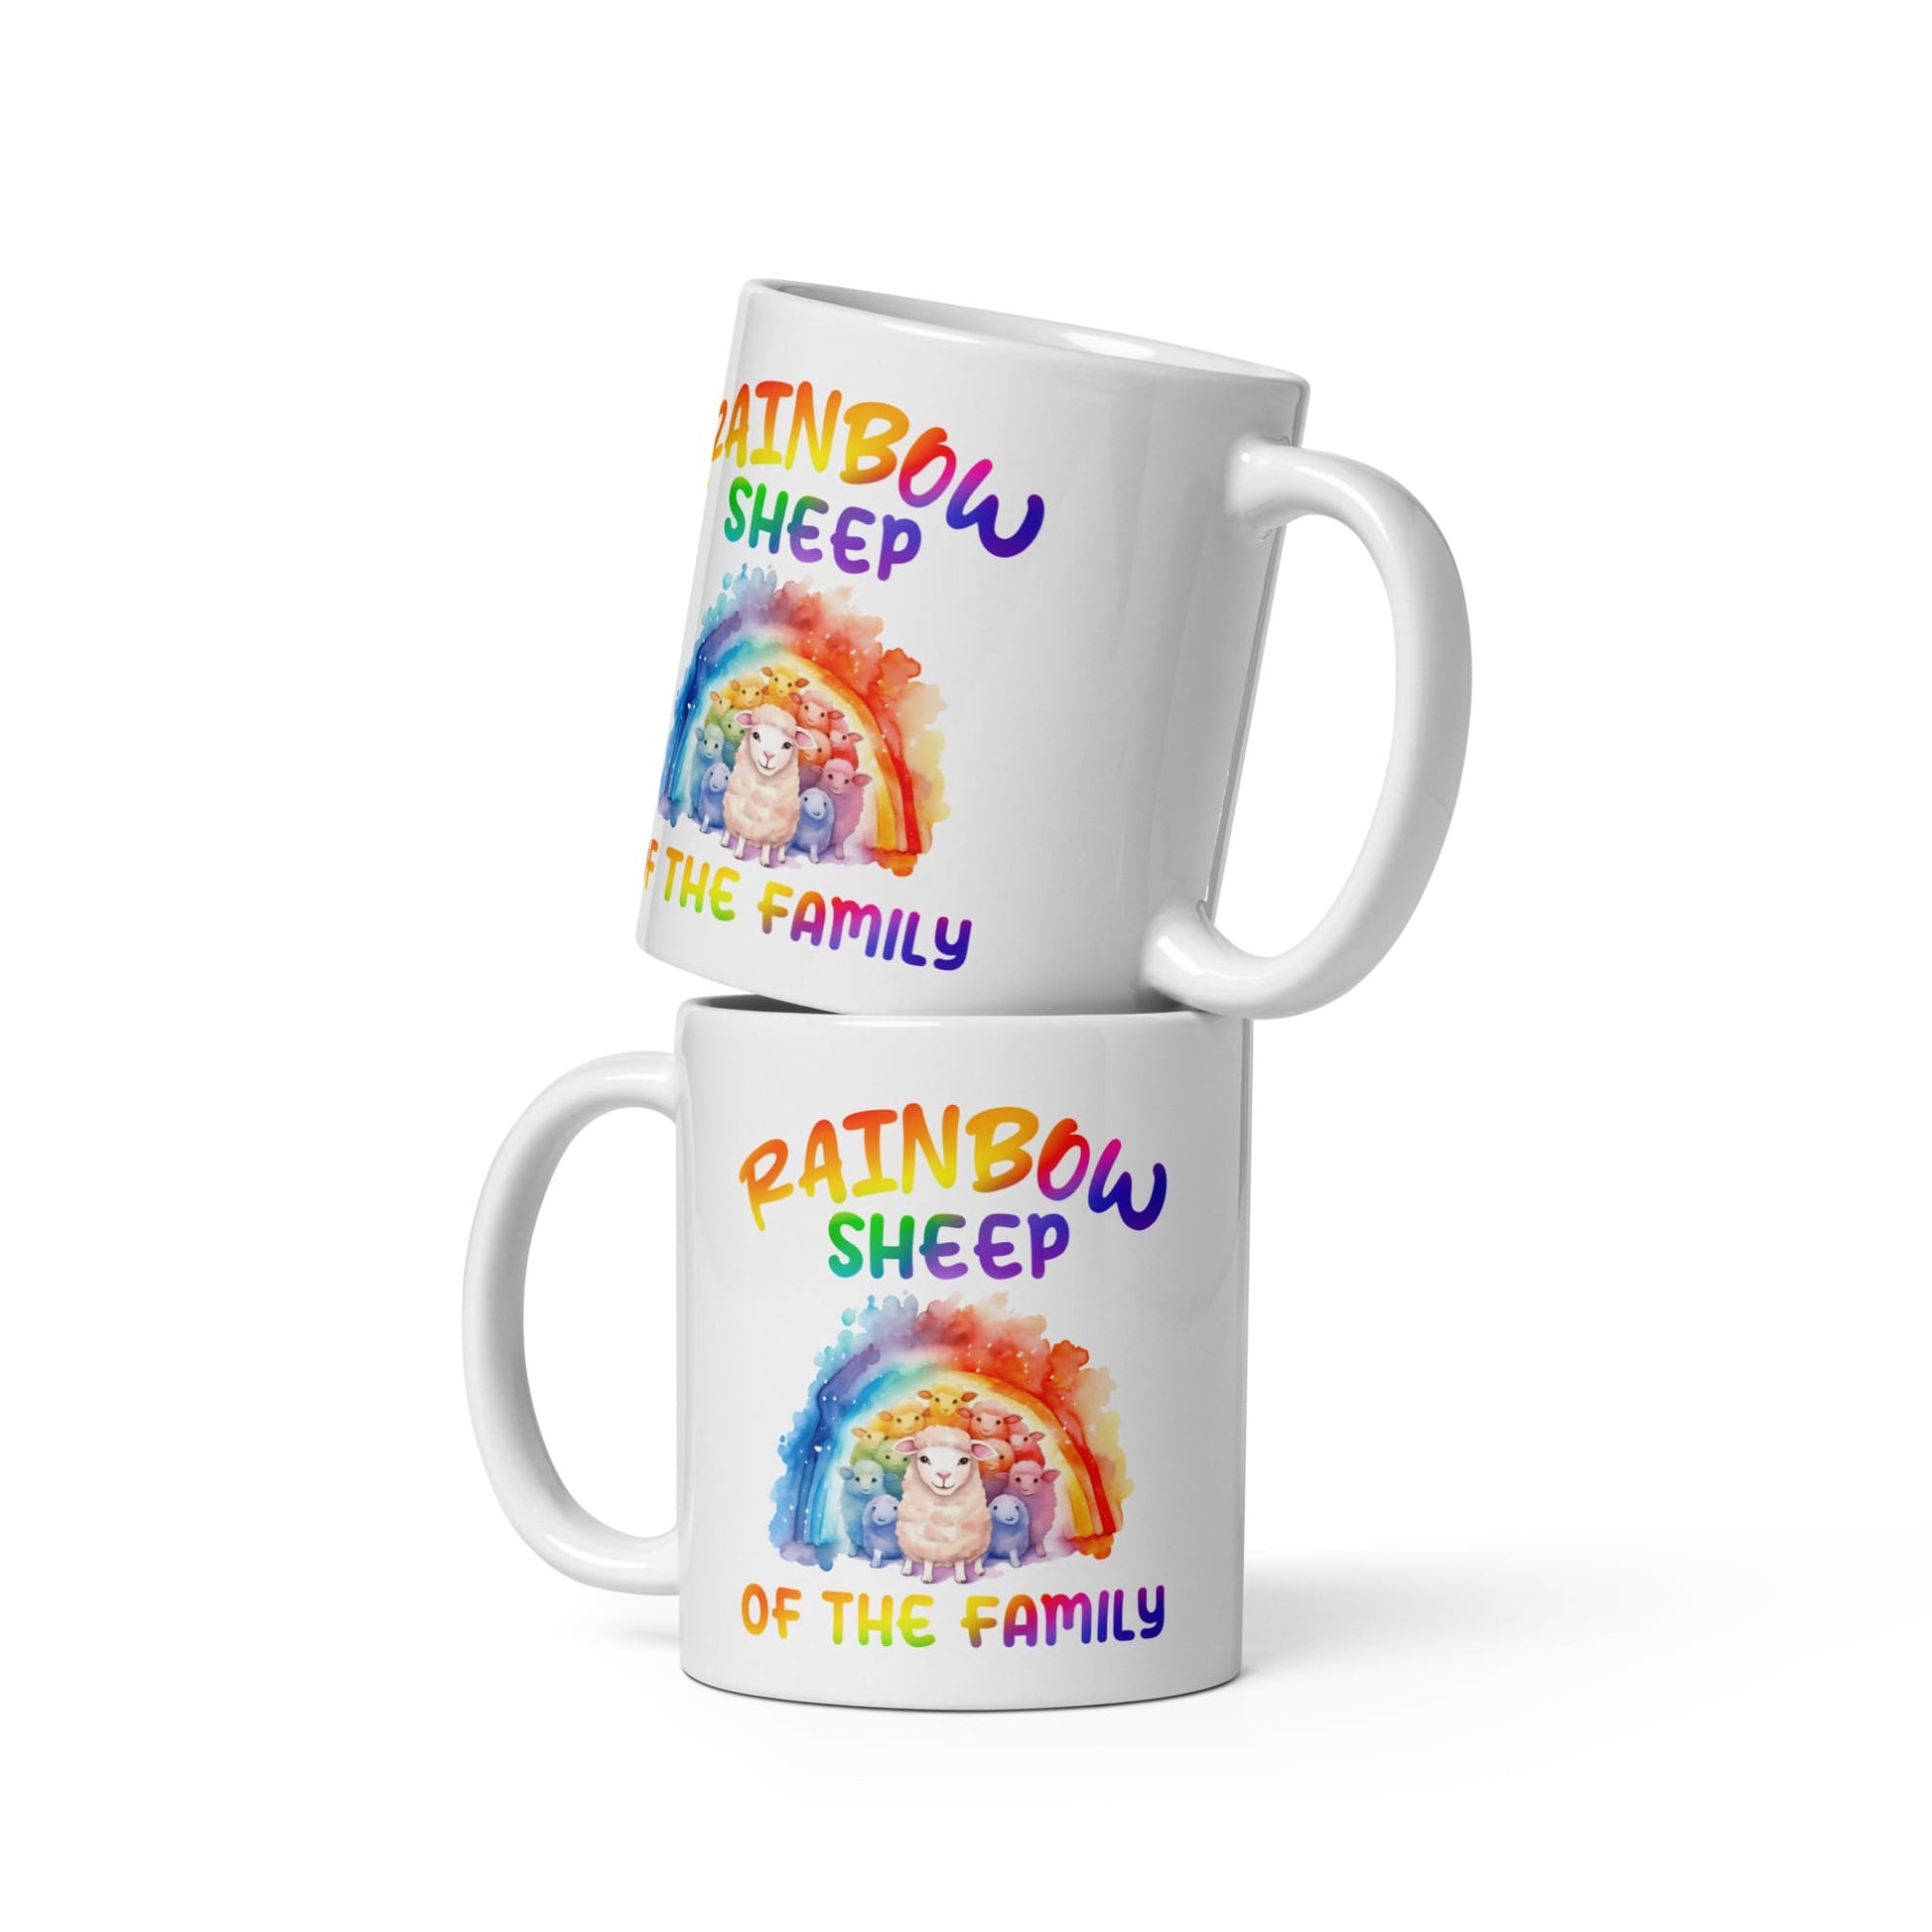 LGBTQ pride mug, rainbow sheep of the family coffee or tea cup both sides